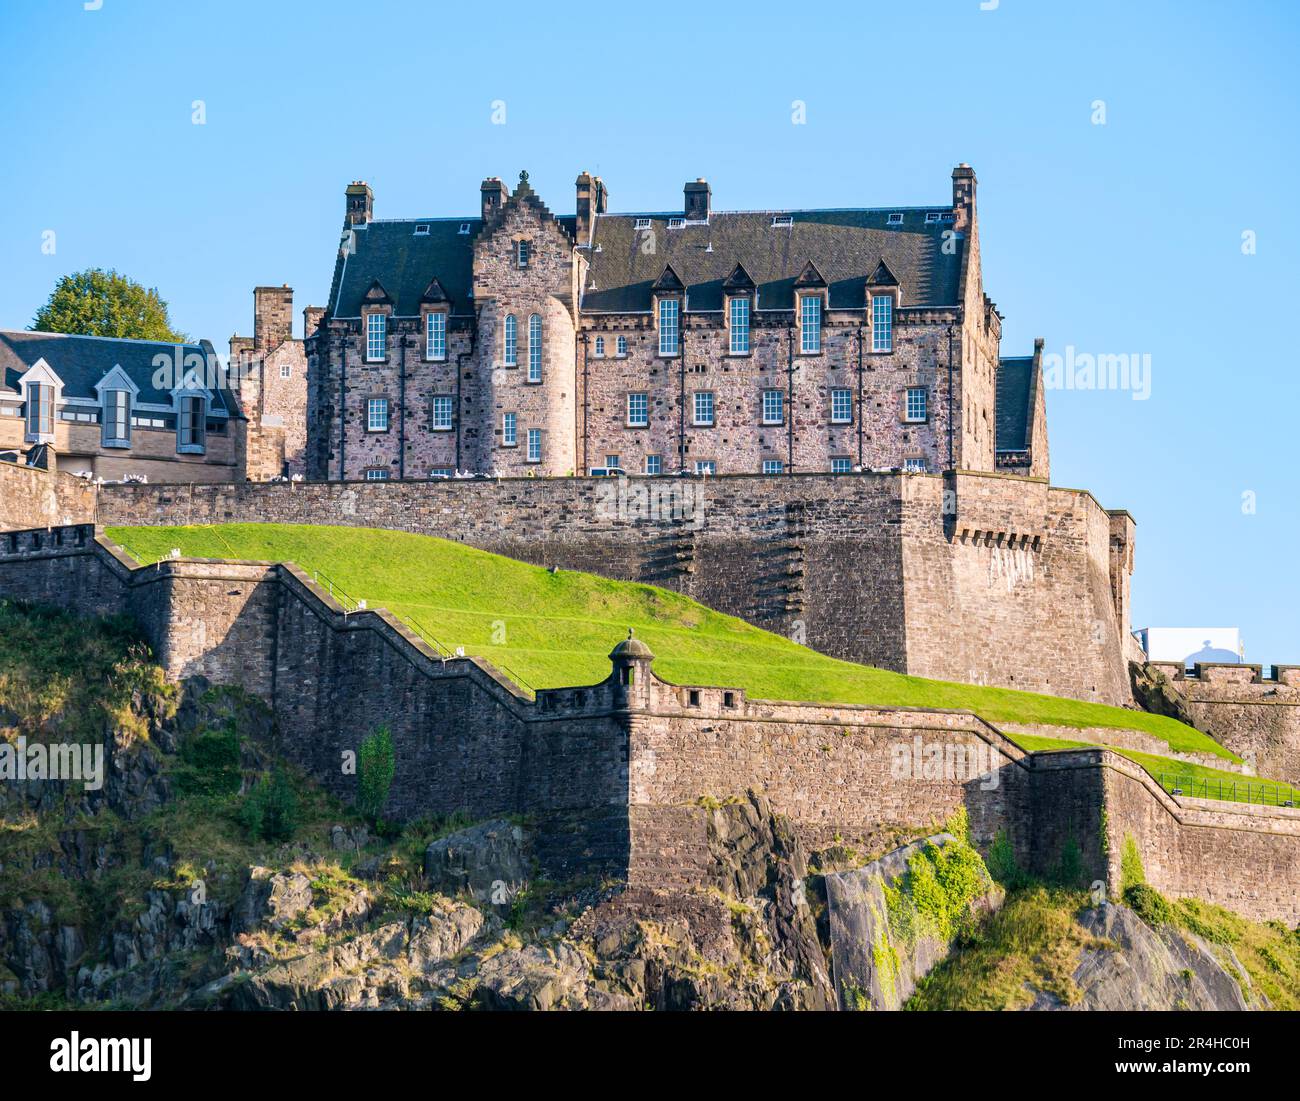 View of Edinburgh Castle building on rock outcrop with walls on cliff, Edinburgh, Scotland, UK Stock Photo